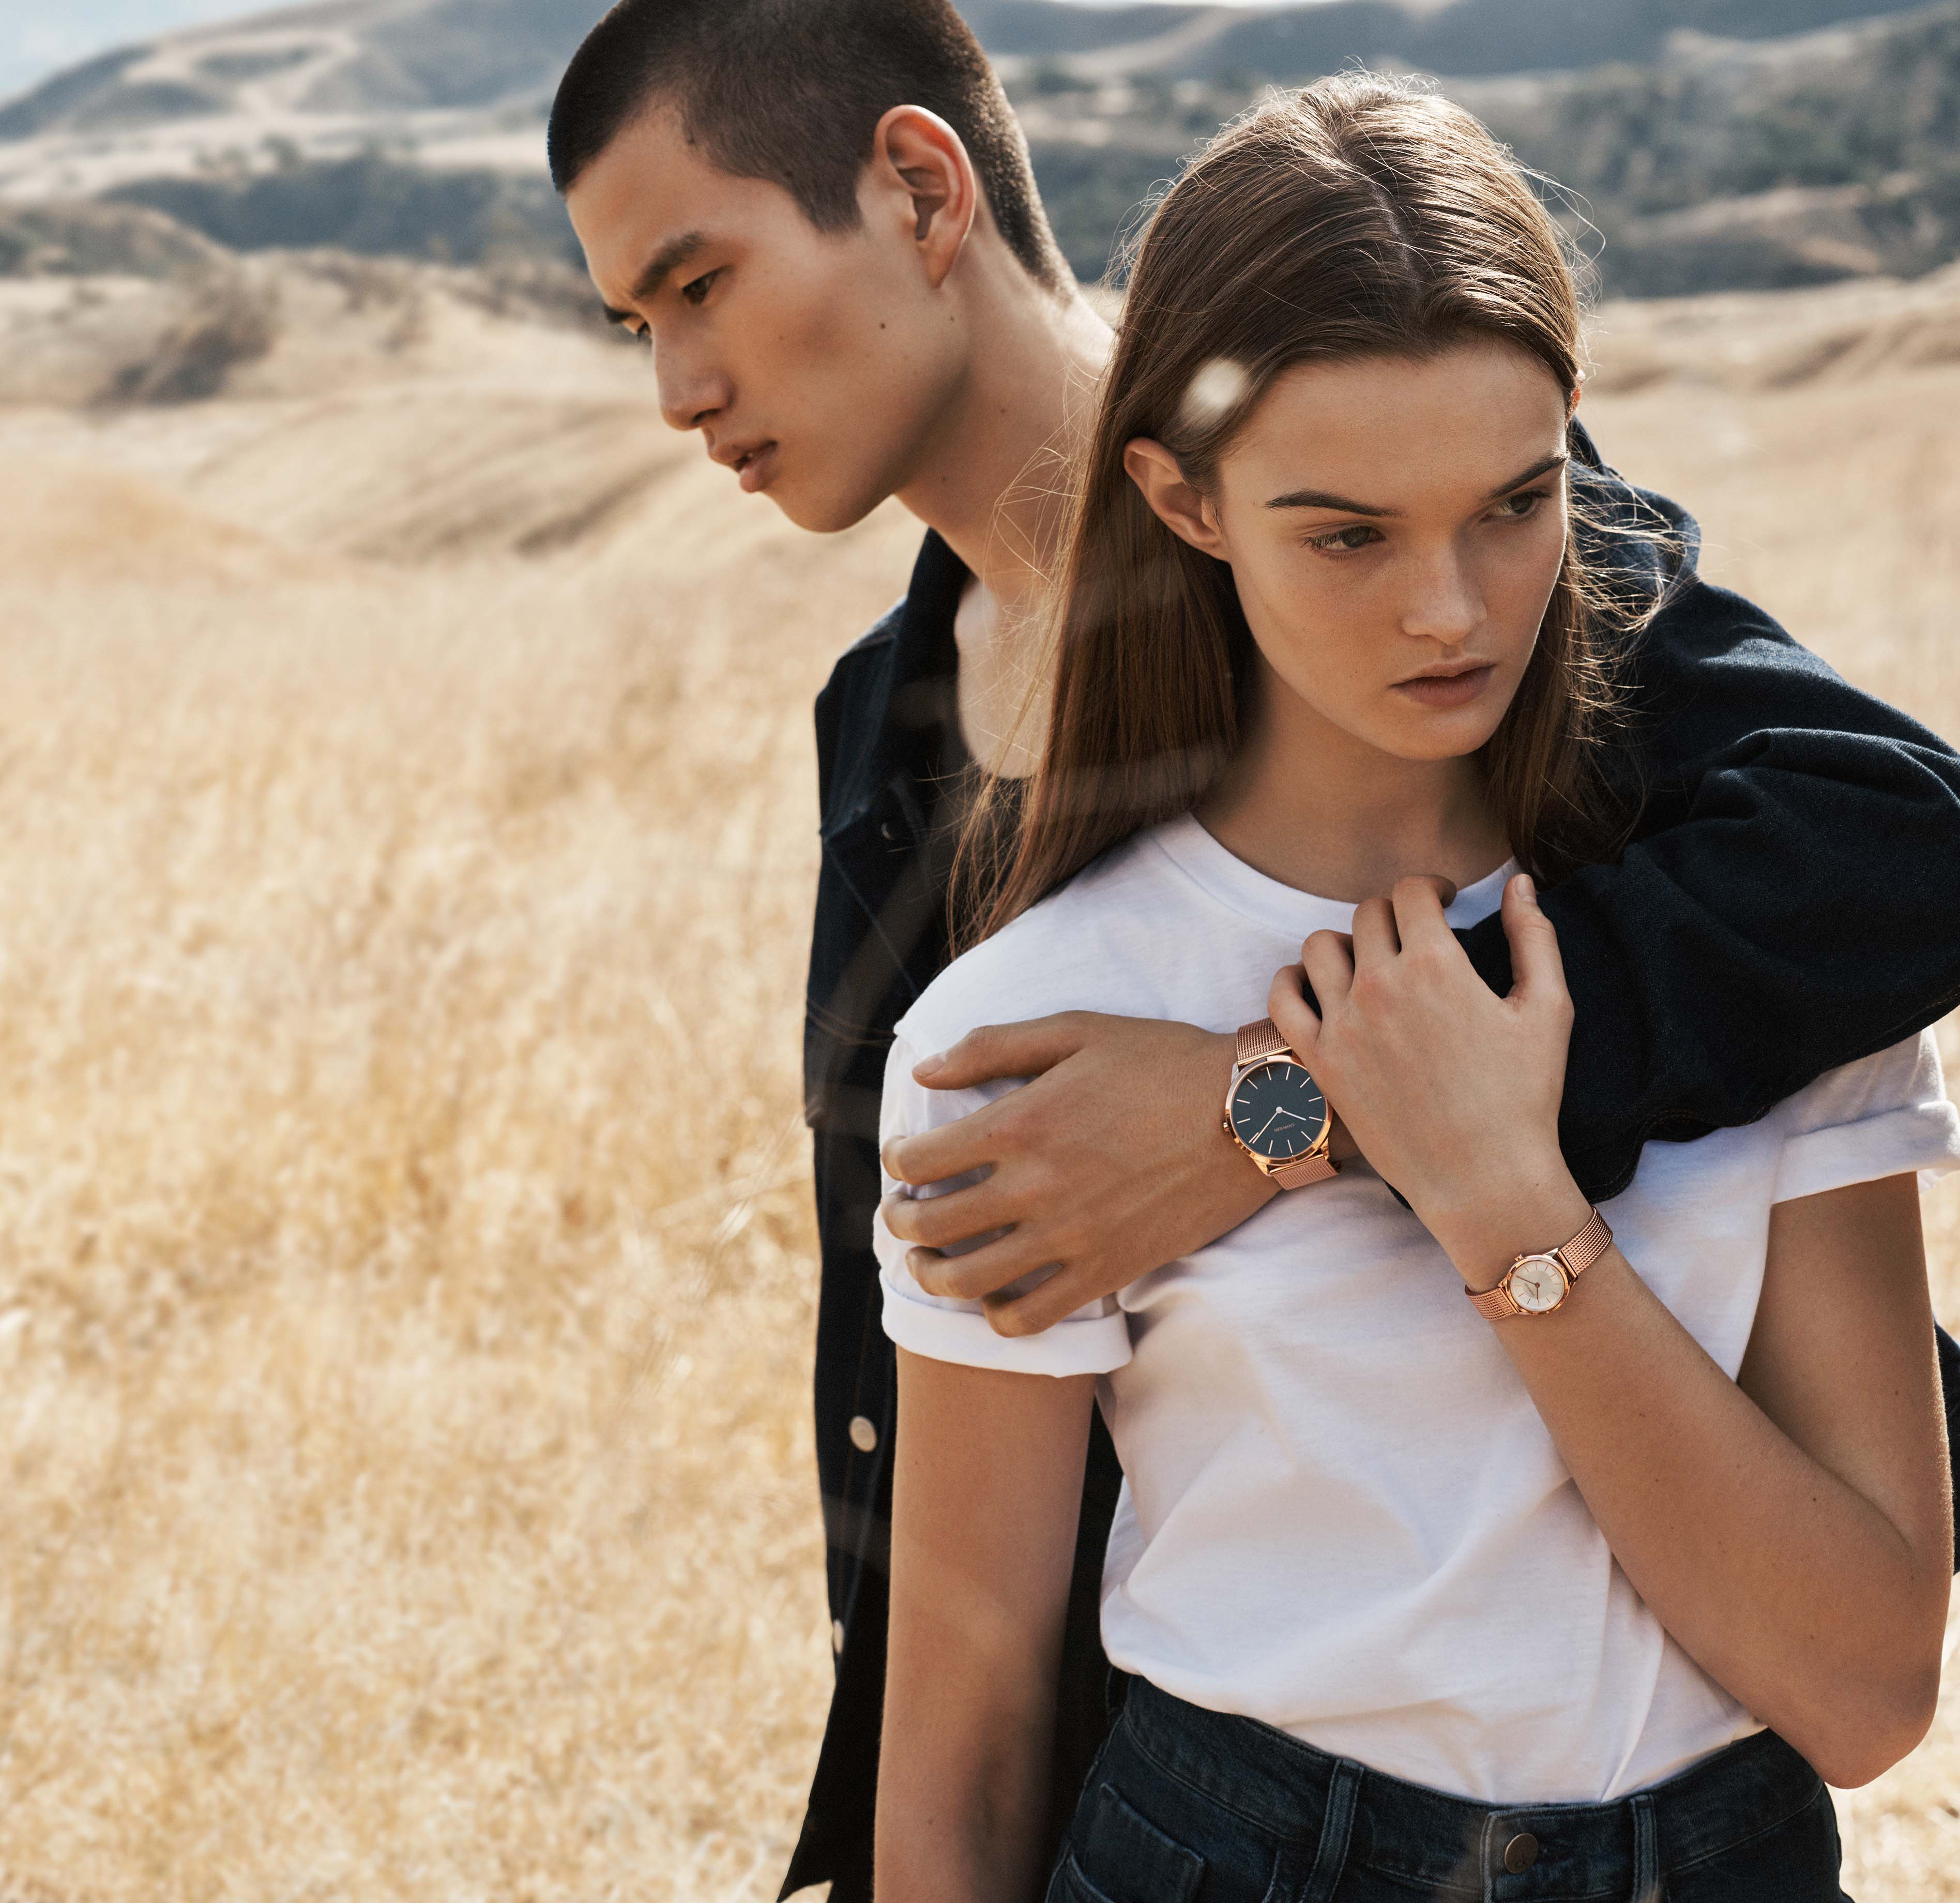 Watch romance. Calvin Klein реклама часов. Парная фотосессия Кельвин Кляйн. Romance watch.